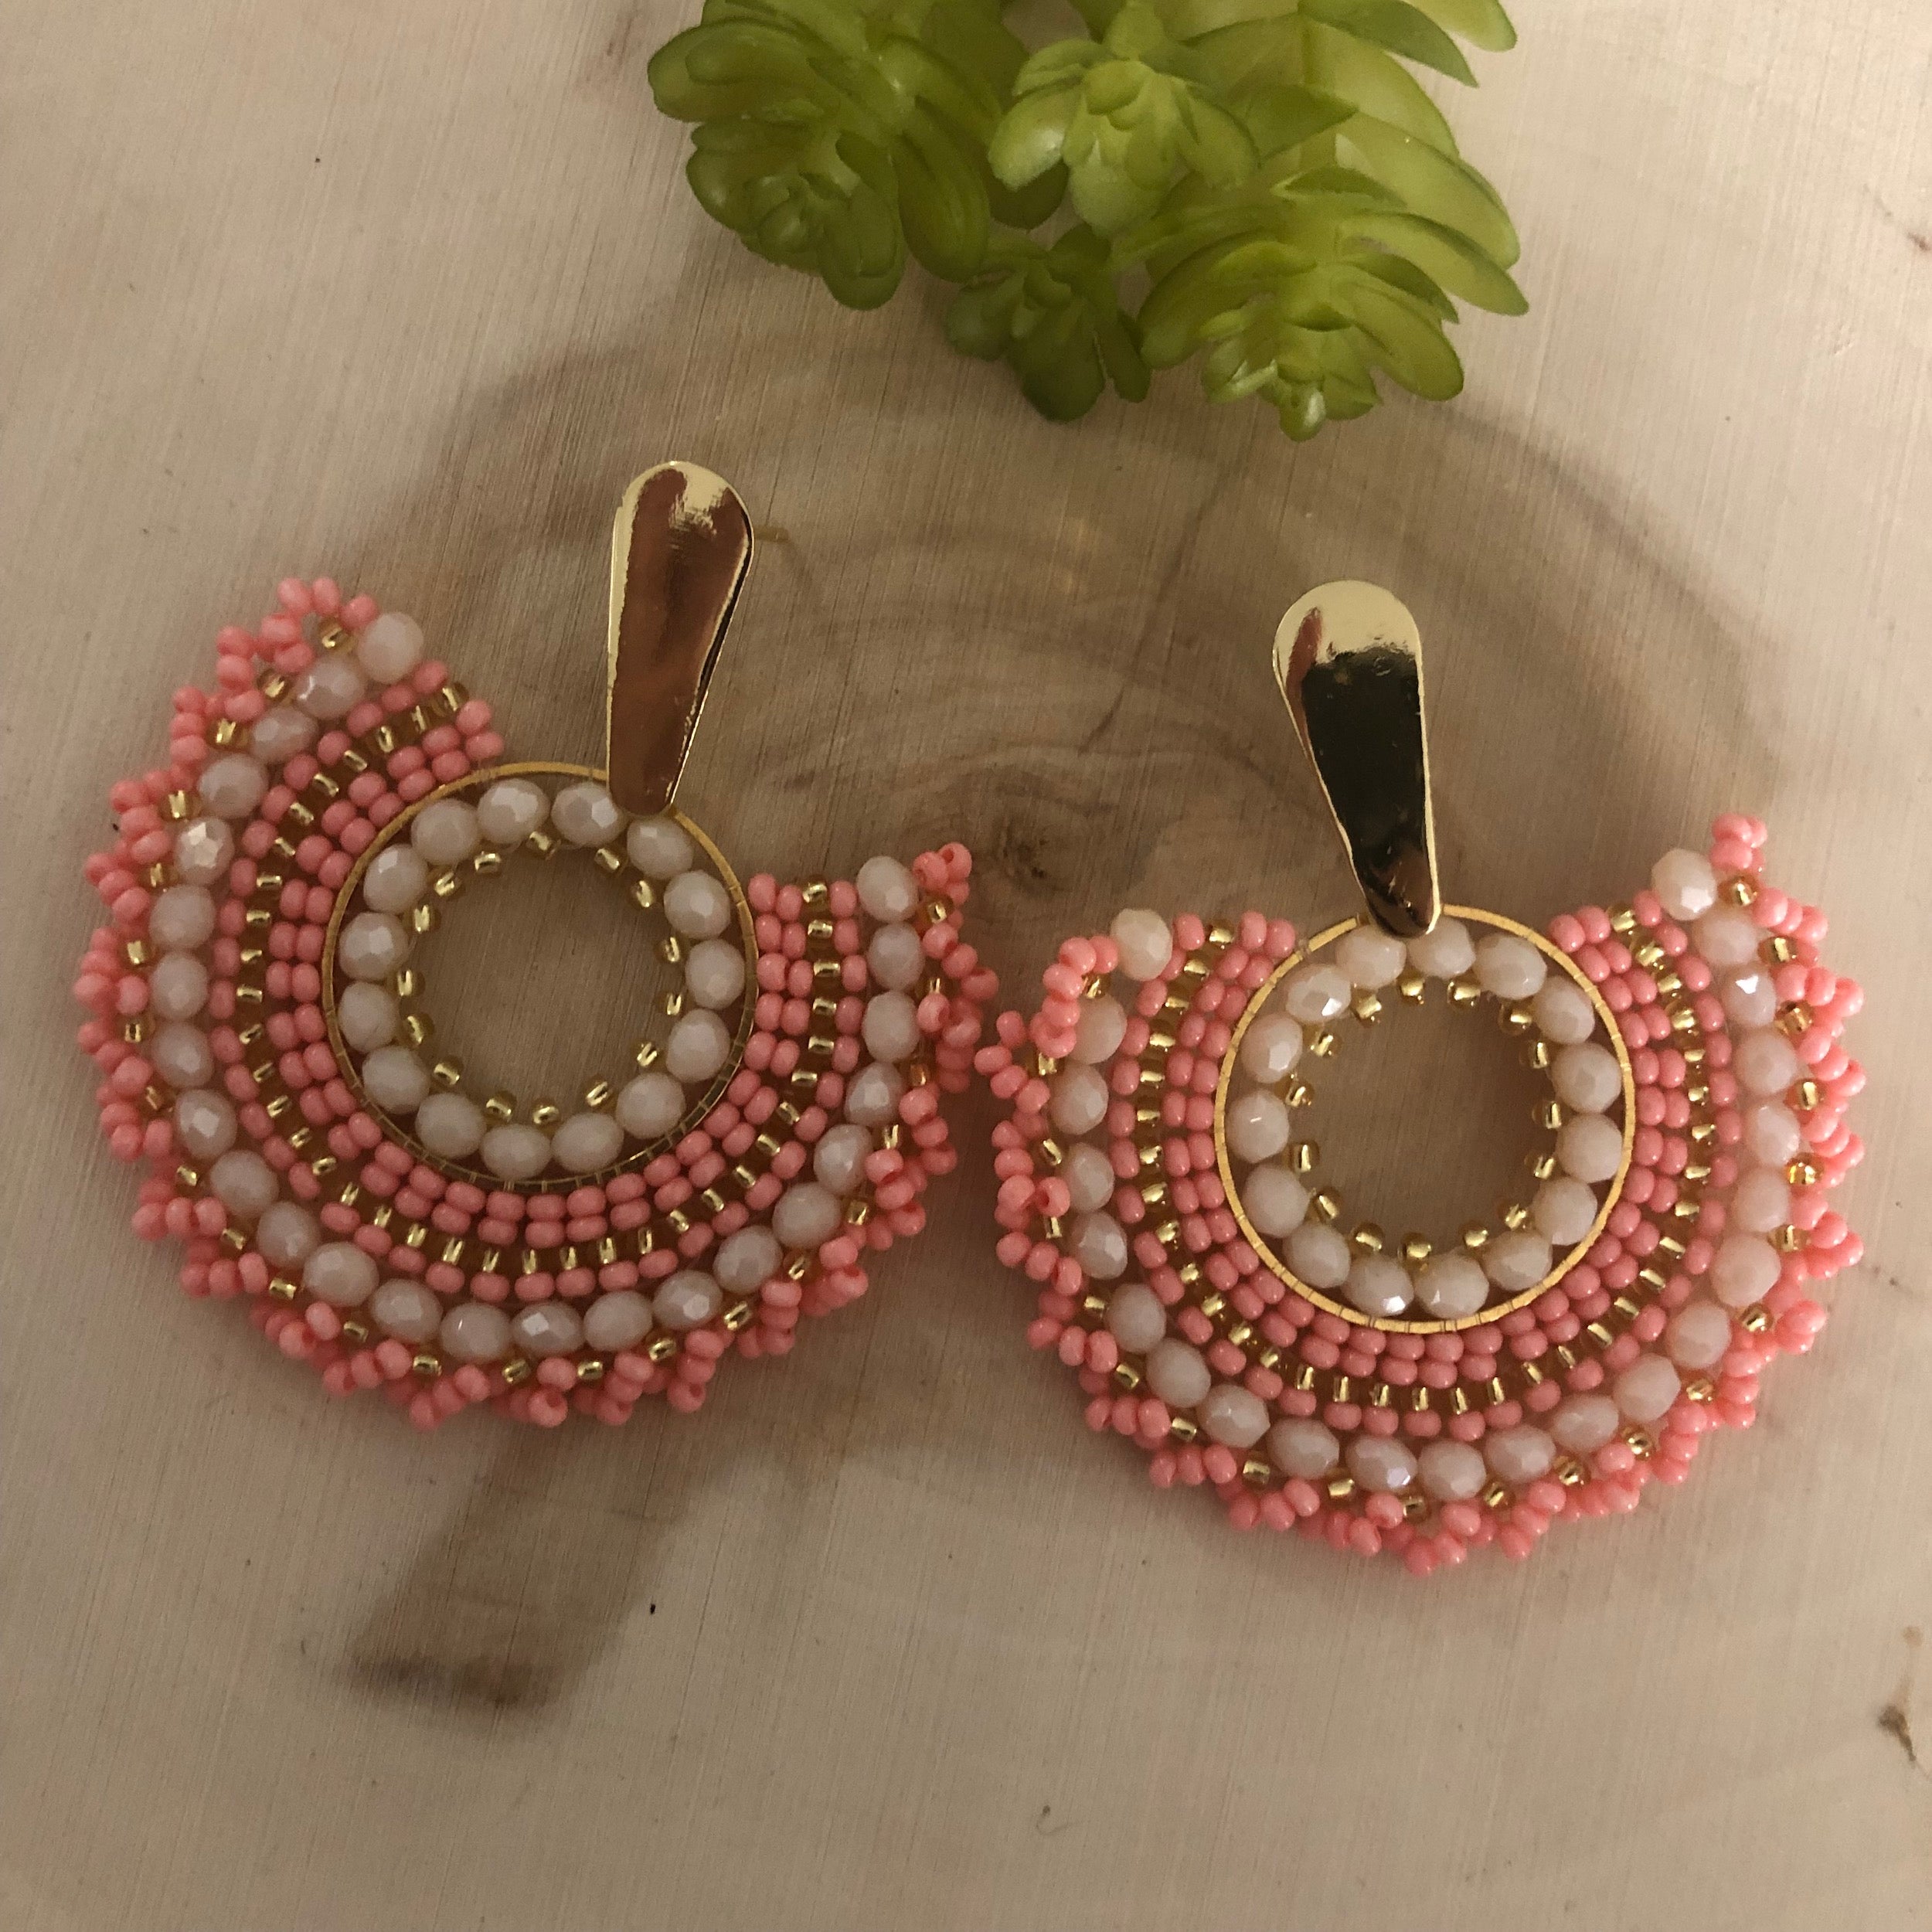 20 Cute Handmade Earrings Ideas - The Crafty Blog Stalker